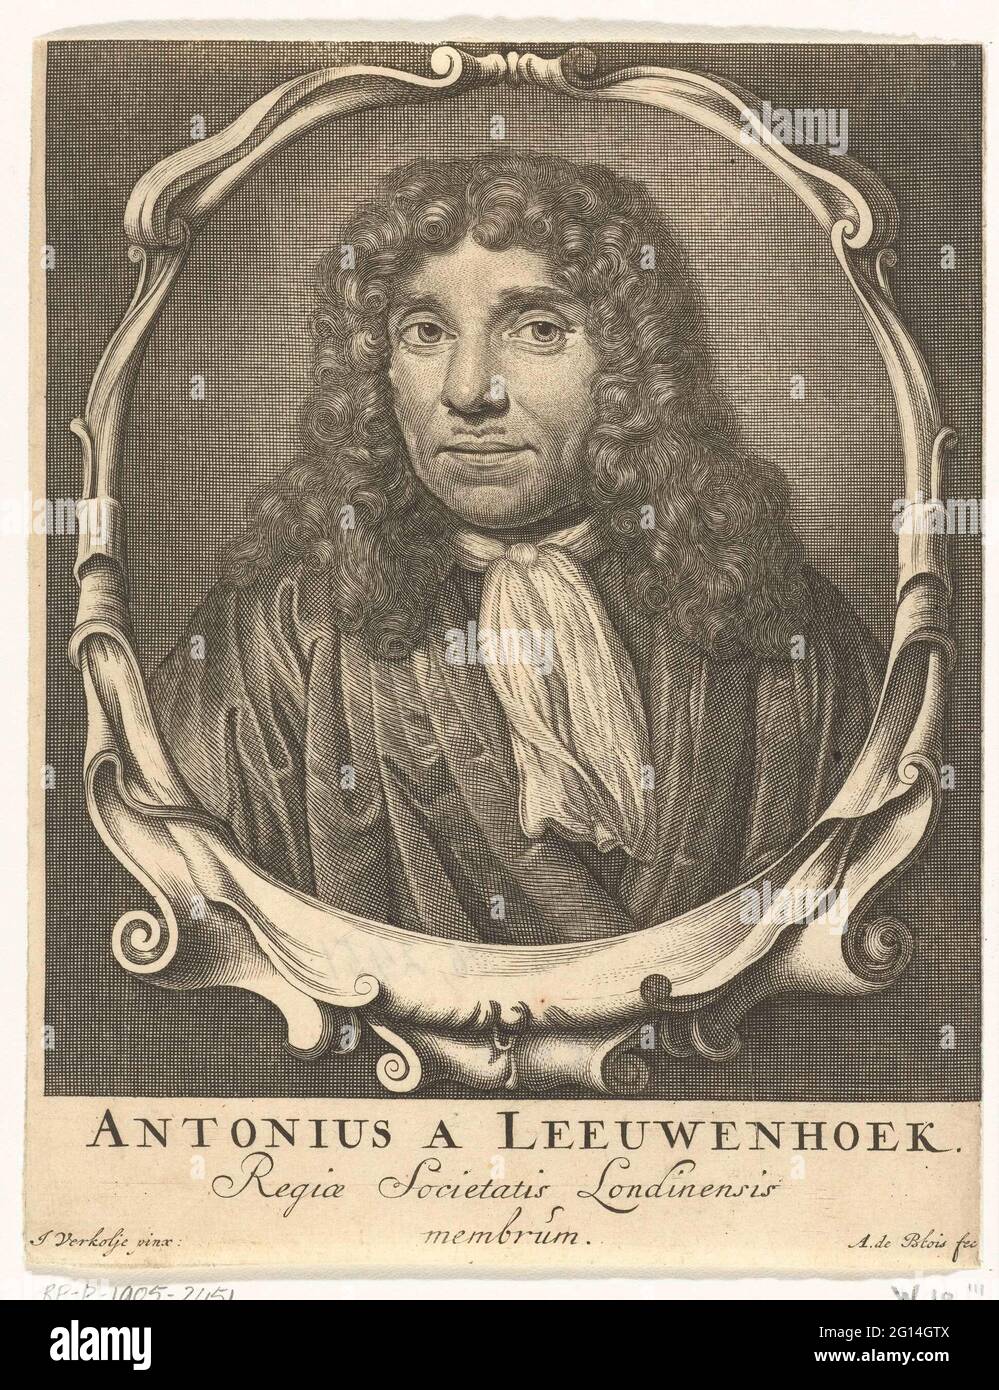 Portrait of Antonie van Leeuwenhoek; Antonius a Leeuwenhoek Regiae Societatis Londinensis. Portrait of Antonie van Leeuwenhoek, bust in oval picture frame with curl ornaments. Stock Photo